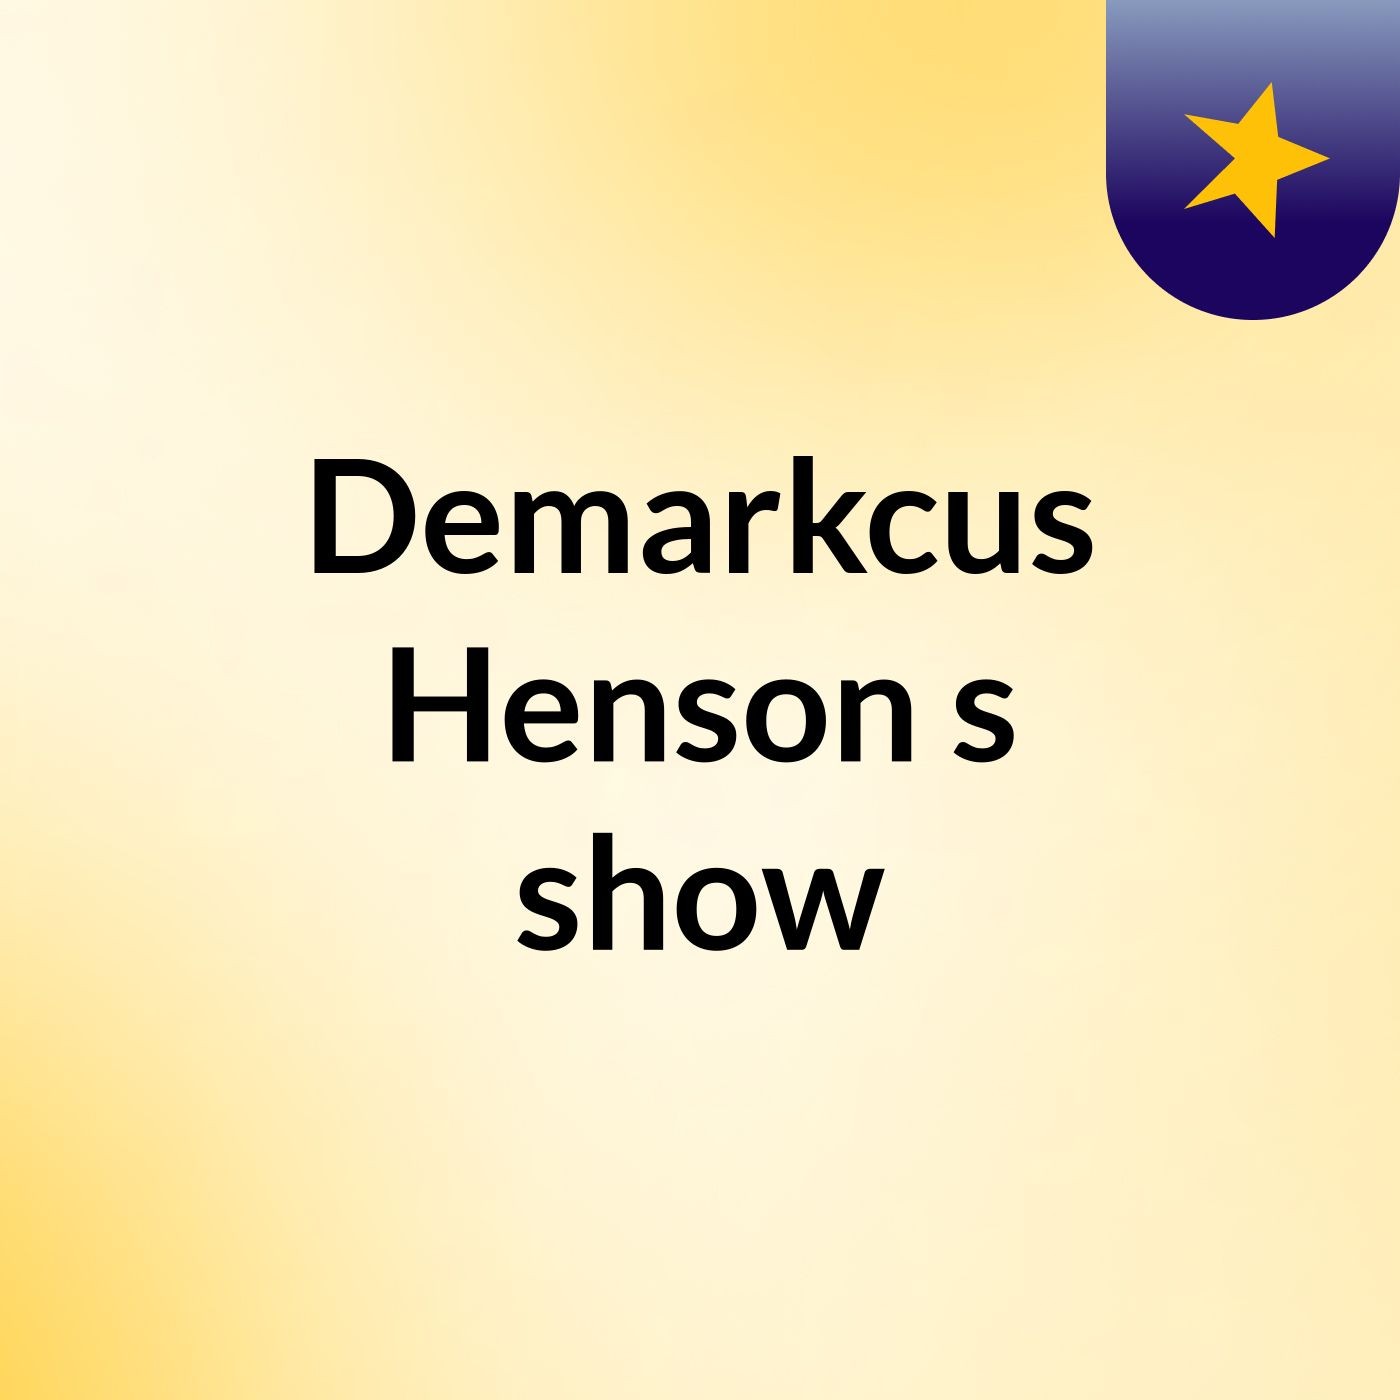 Demarkcus Henson's show